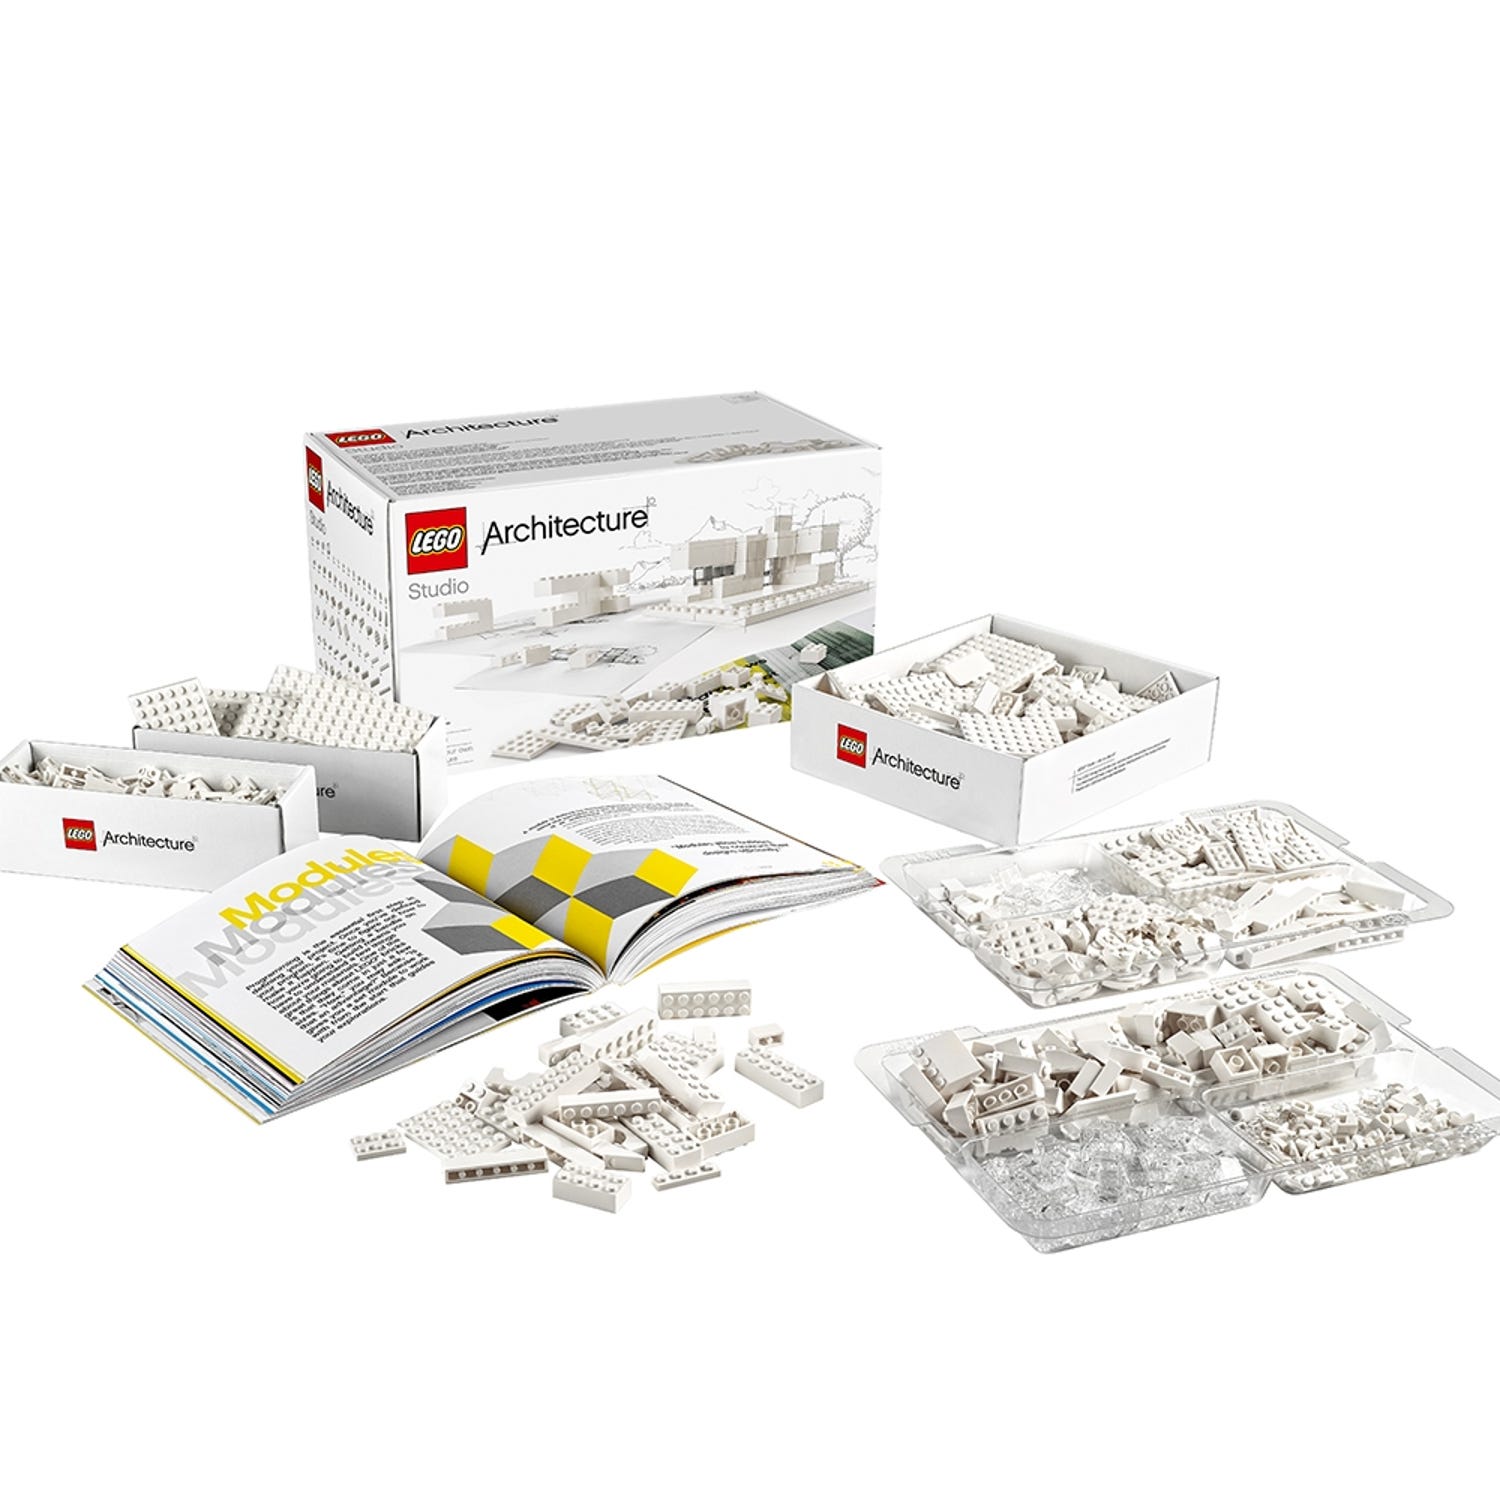 21050 | Buy online at the Official LEGO® Shop DK